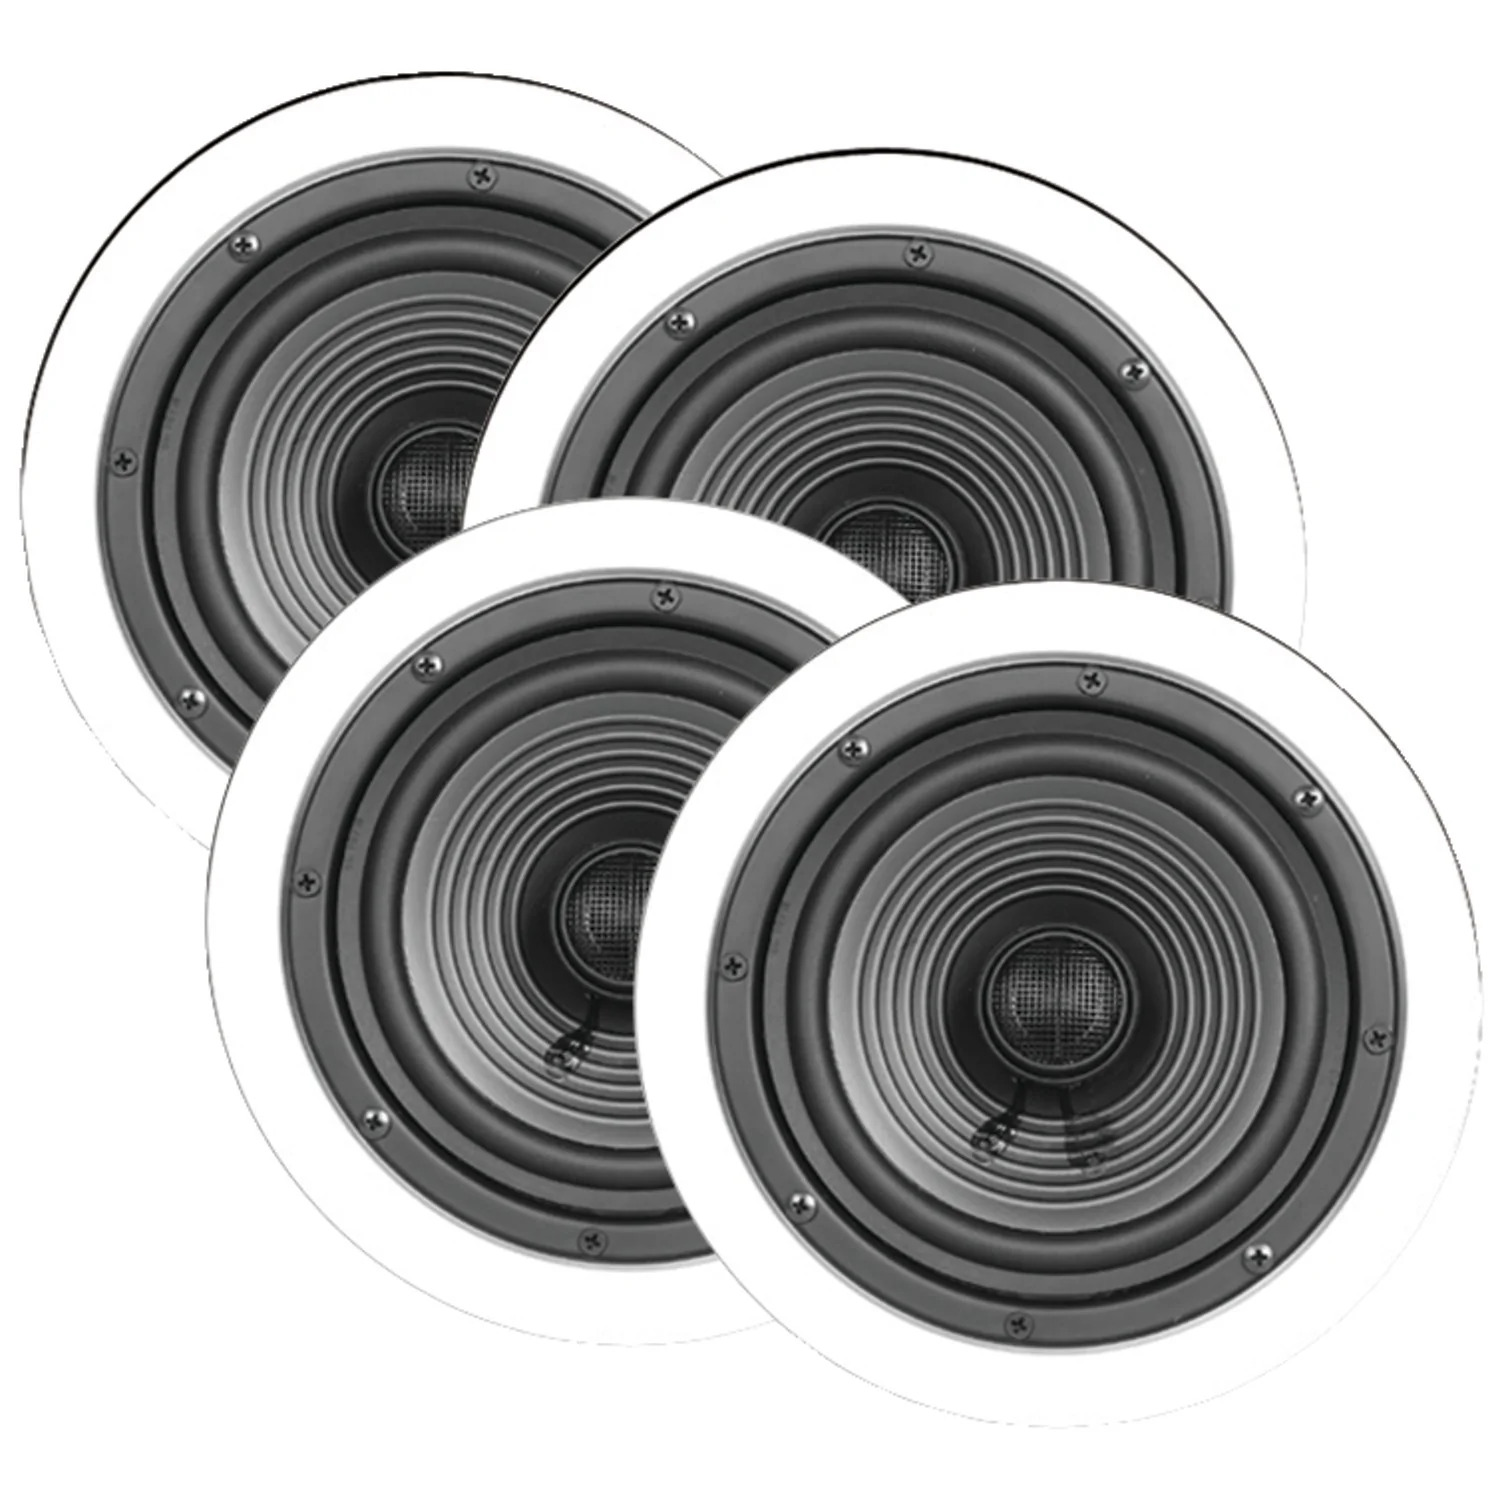 Architech® Architech® 6.5 Premium Series Ceiling Speakers, Contractor 4 Pk - image 2 of 2